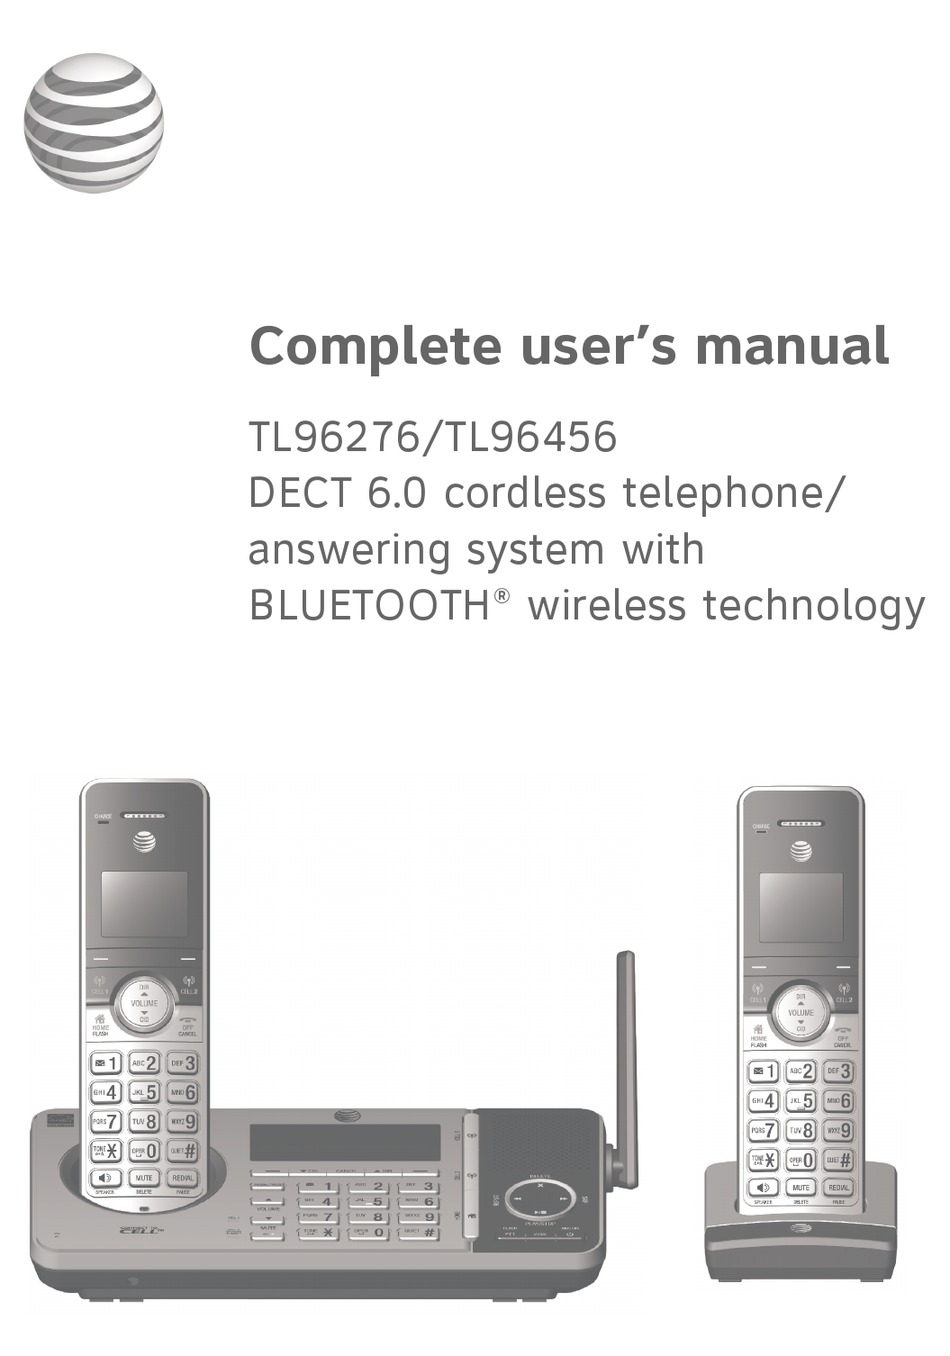 AT&T TL96456 COMPLETE USER'S MANUAL Pdf Download | ManualsLib